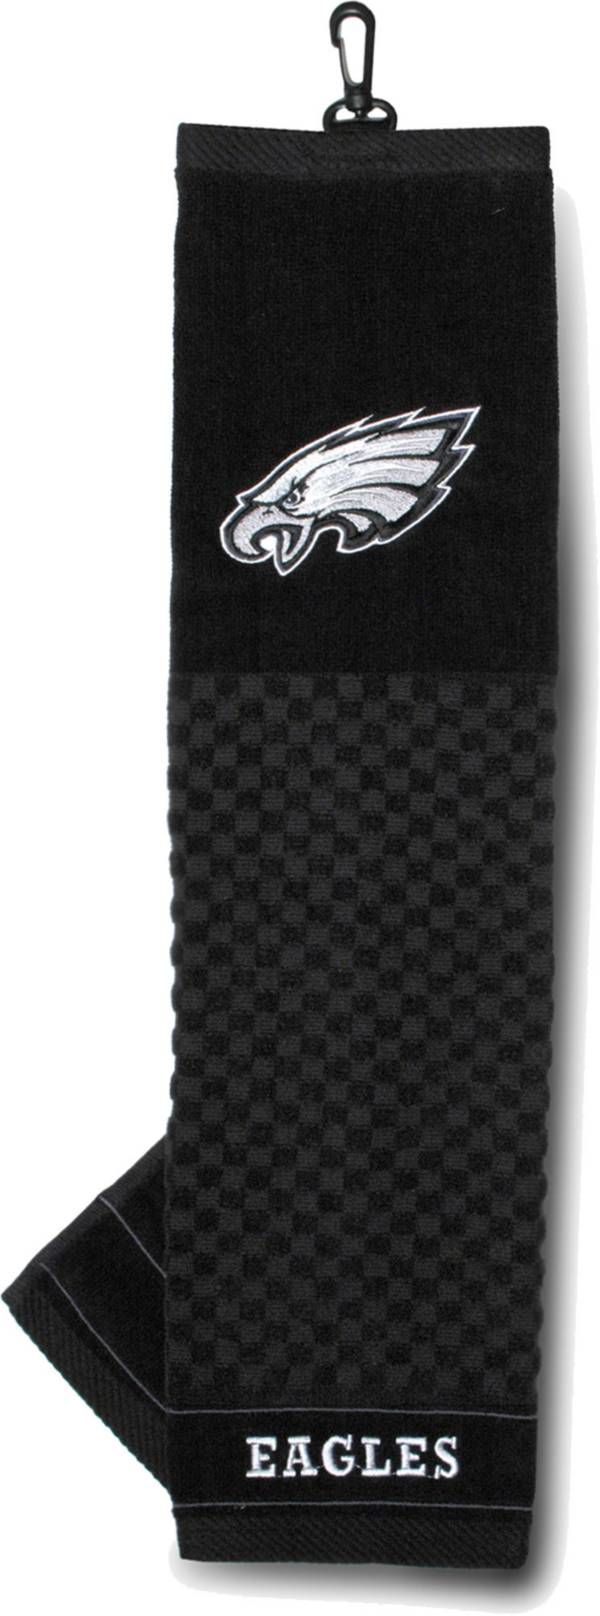 Team Golf Philadelphia Eagles Embroidered Golf Towel product image